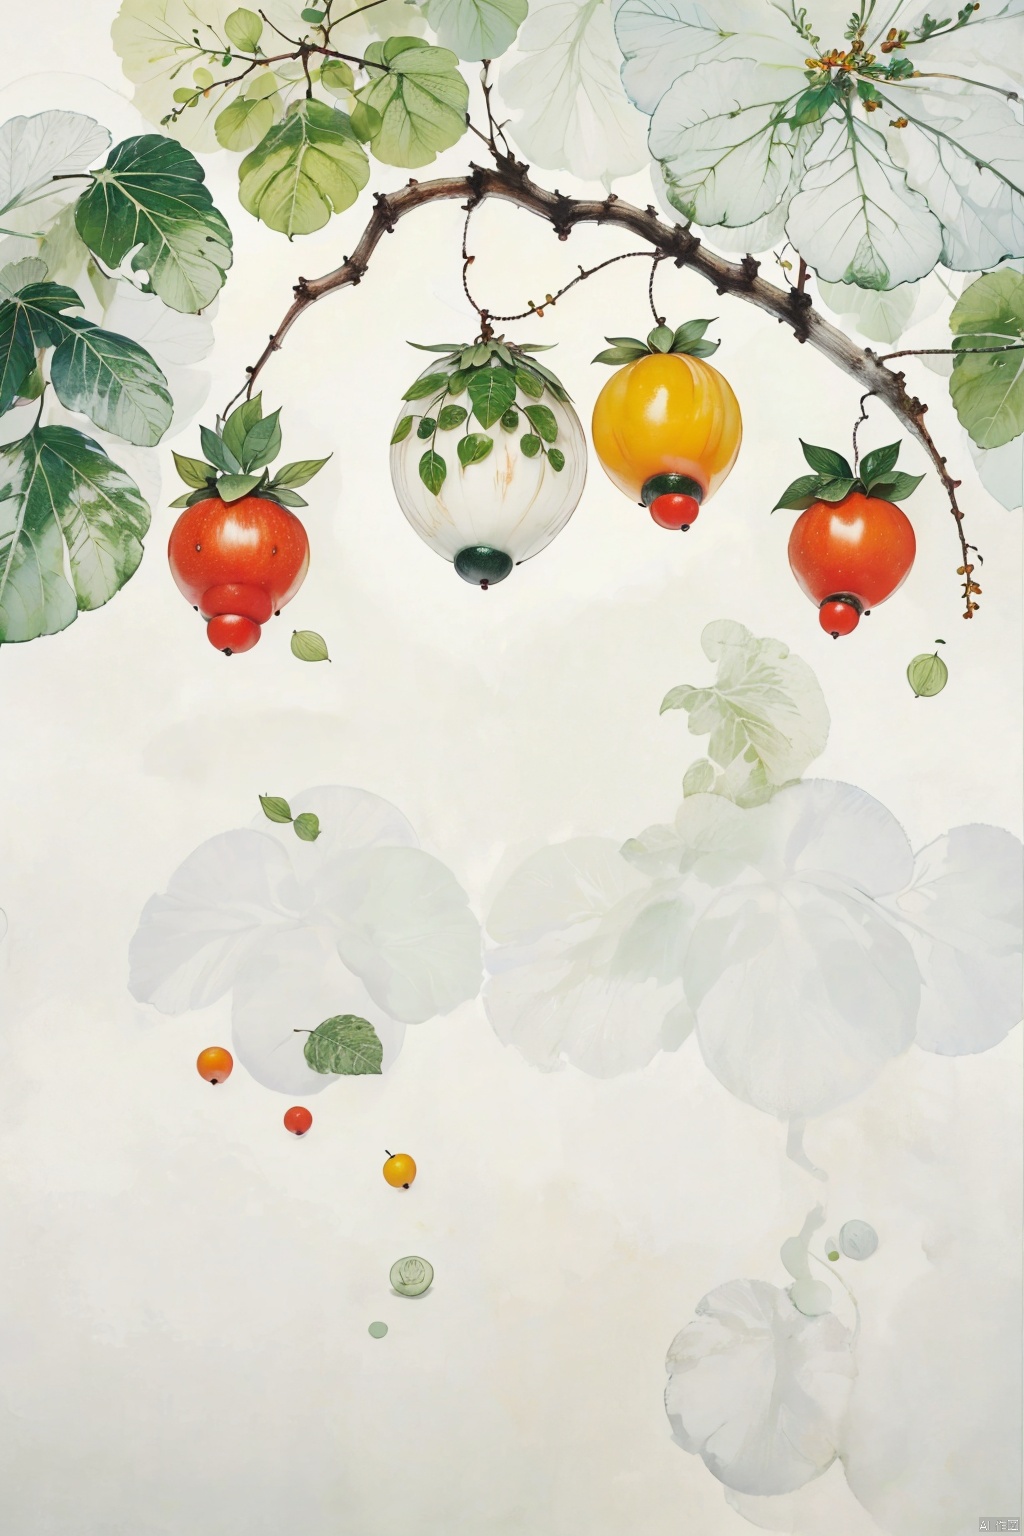 Fruit and vegetable, minimalism, large white space, white background<lora:EMS-358560-EMS:1.000000>